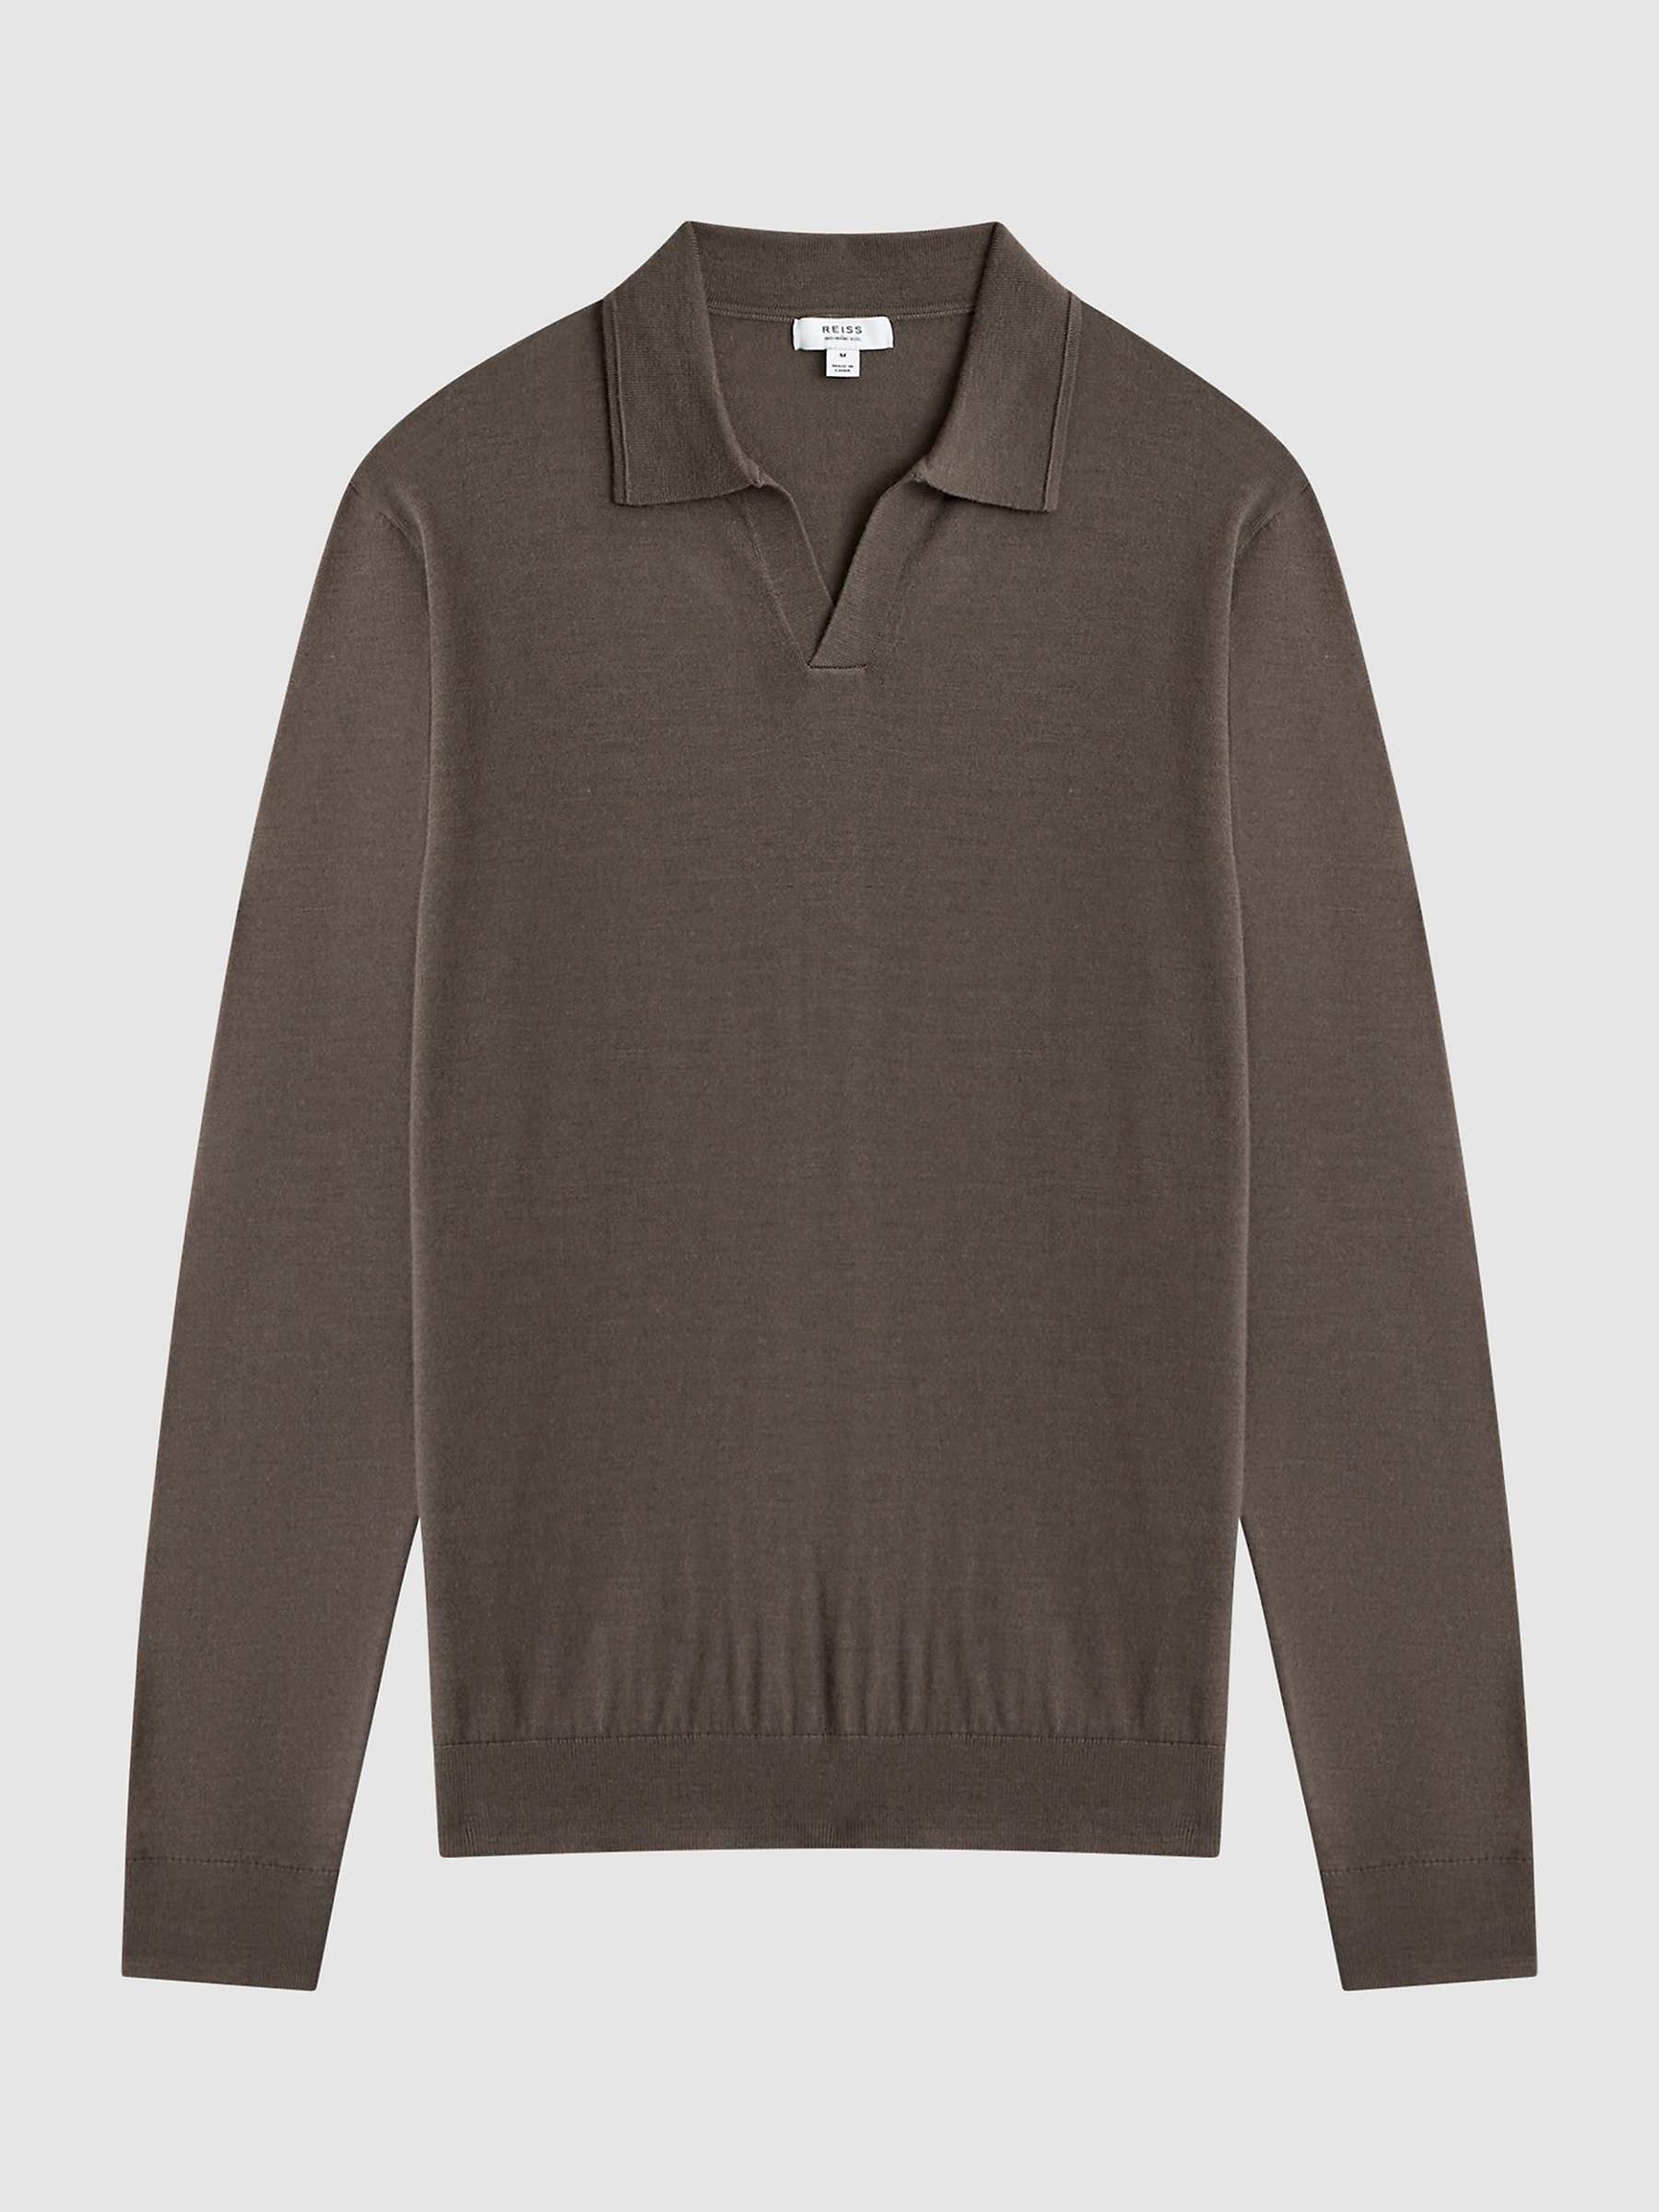 Reiss Milburn Merino Wool Polo Shirt, Mushroom at John Lewis & Partners